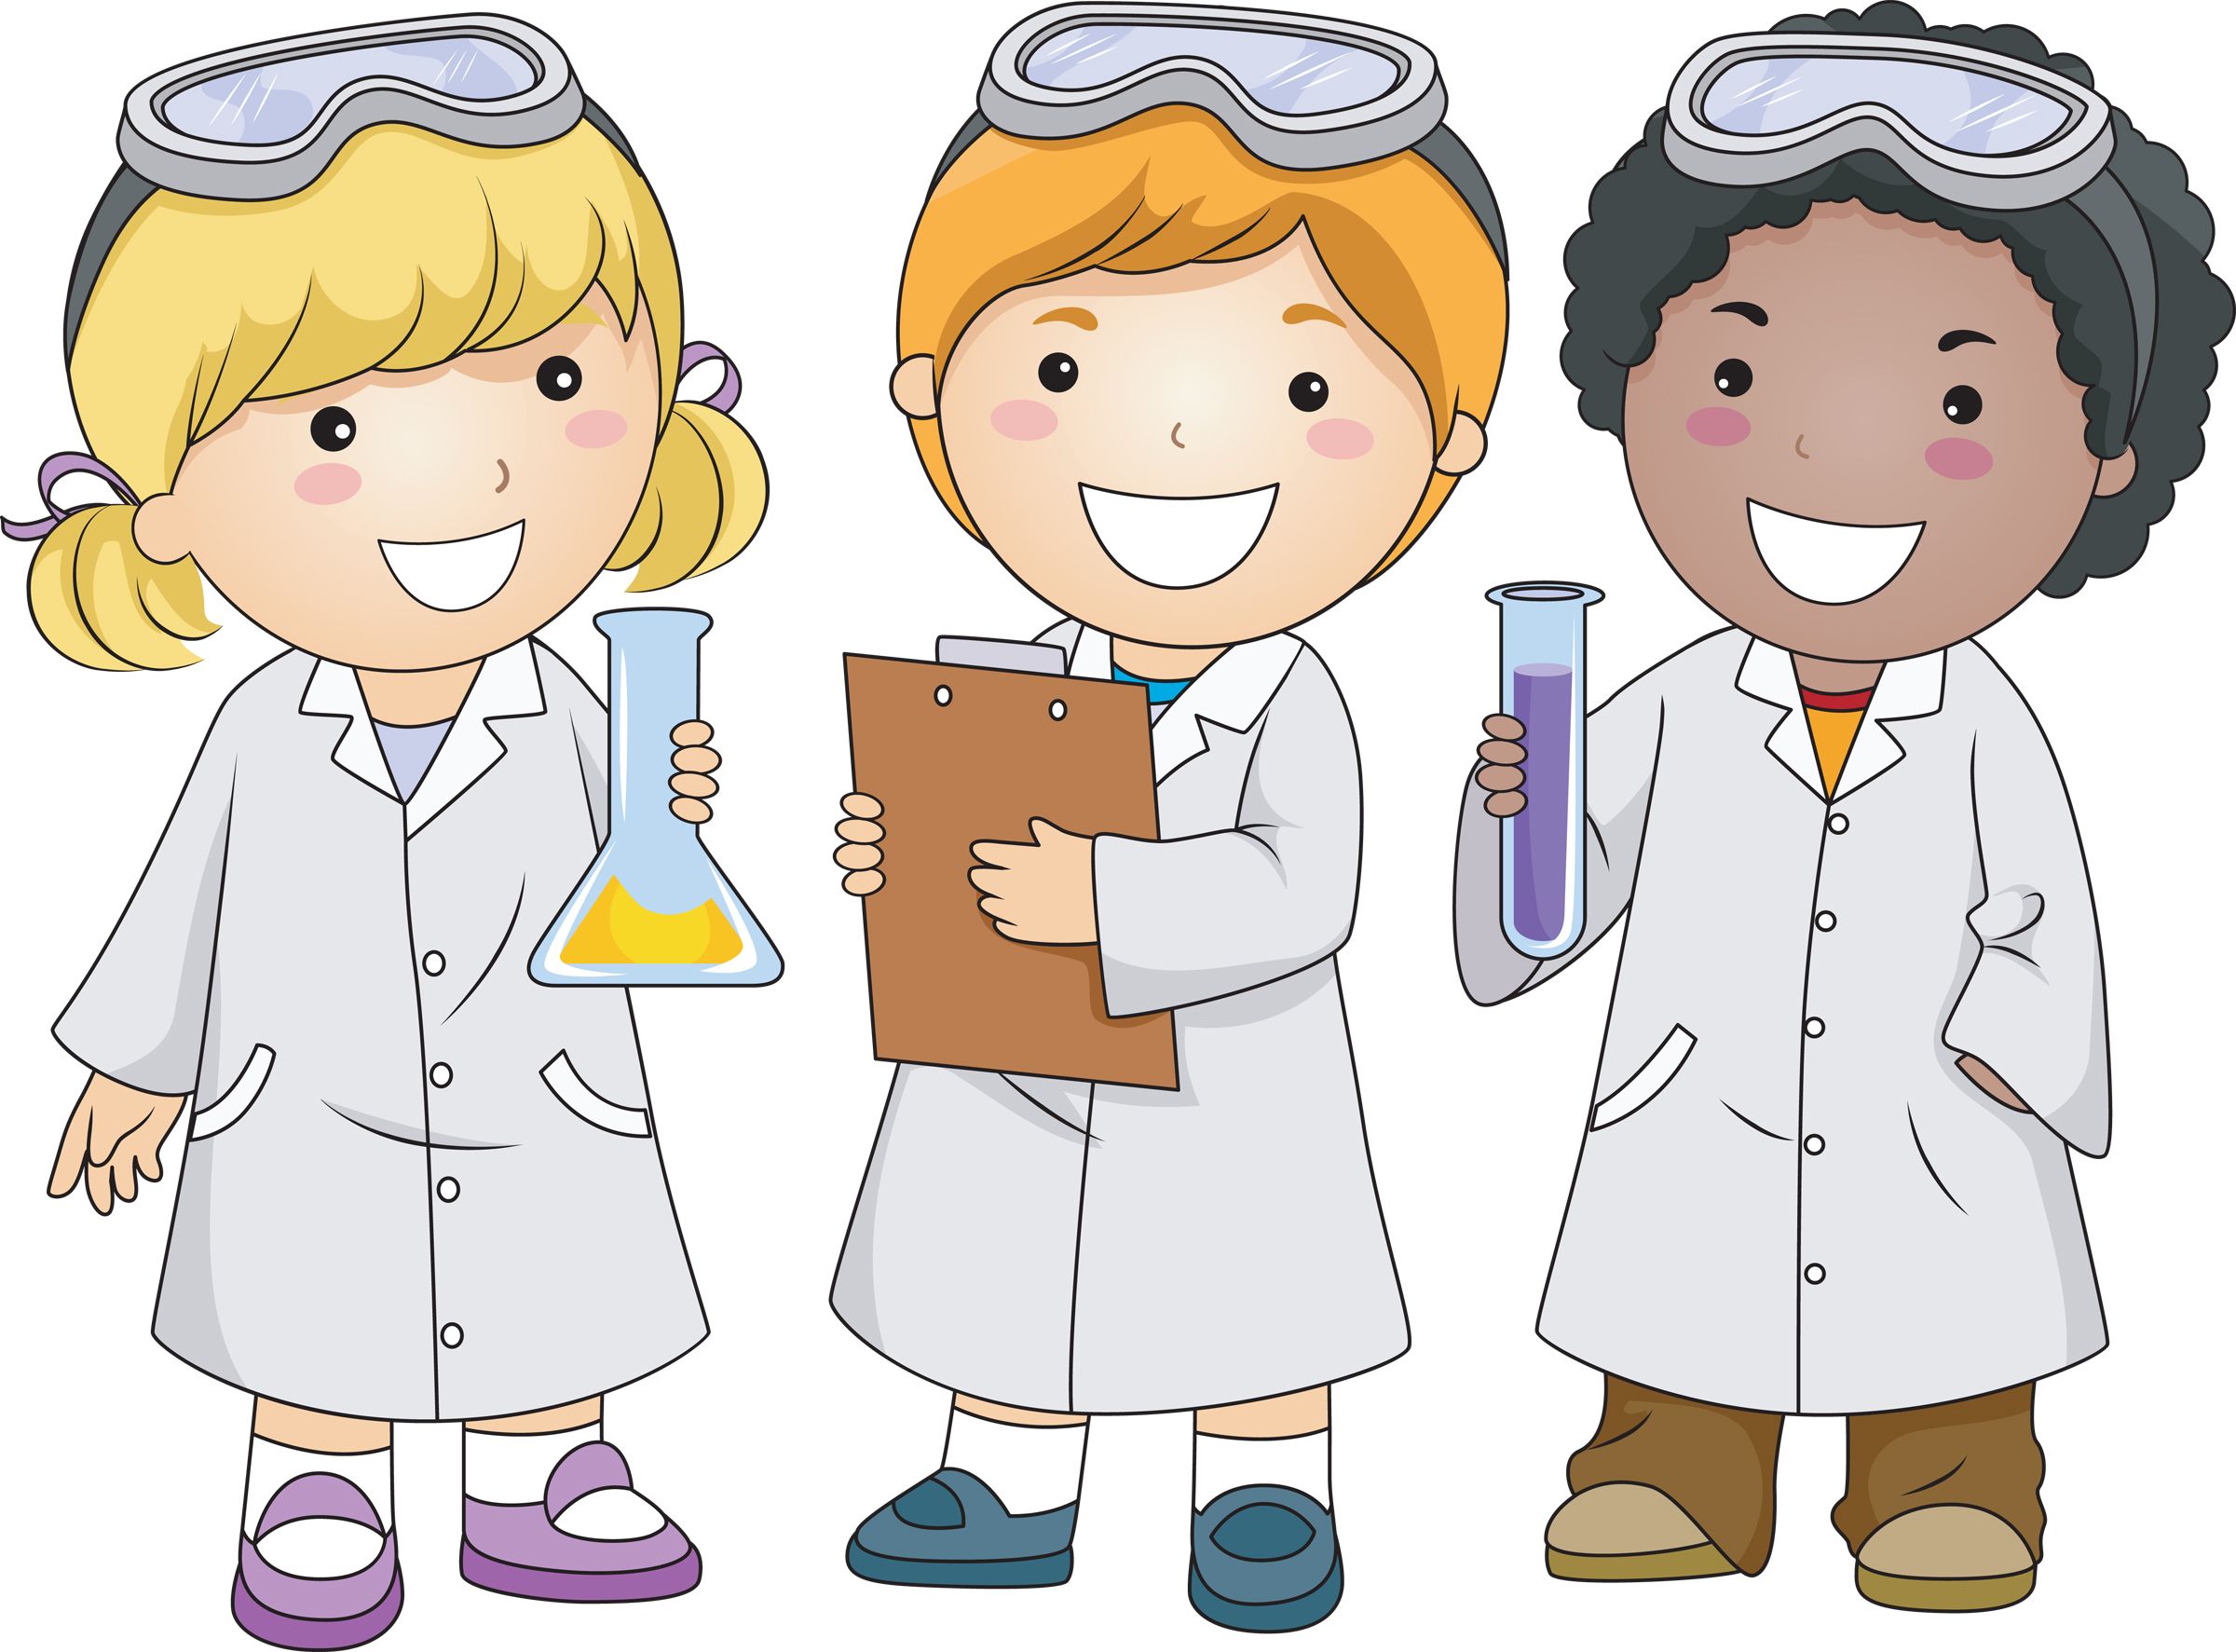 Children dressed as scientists